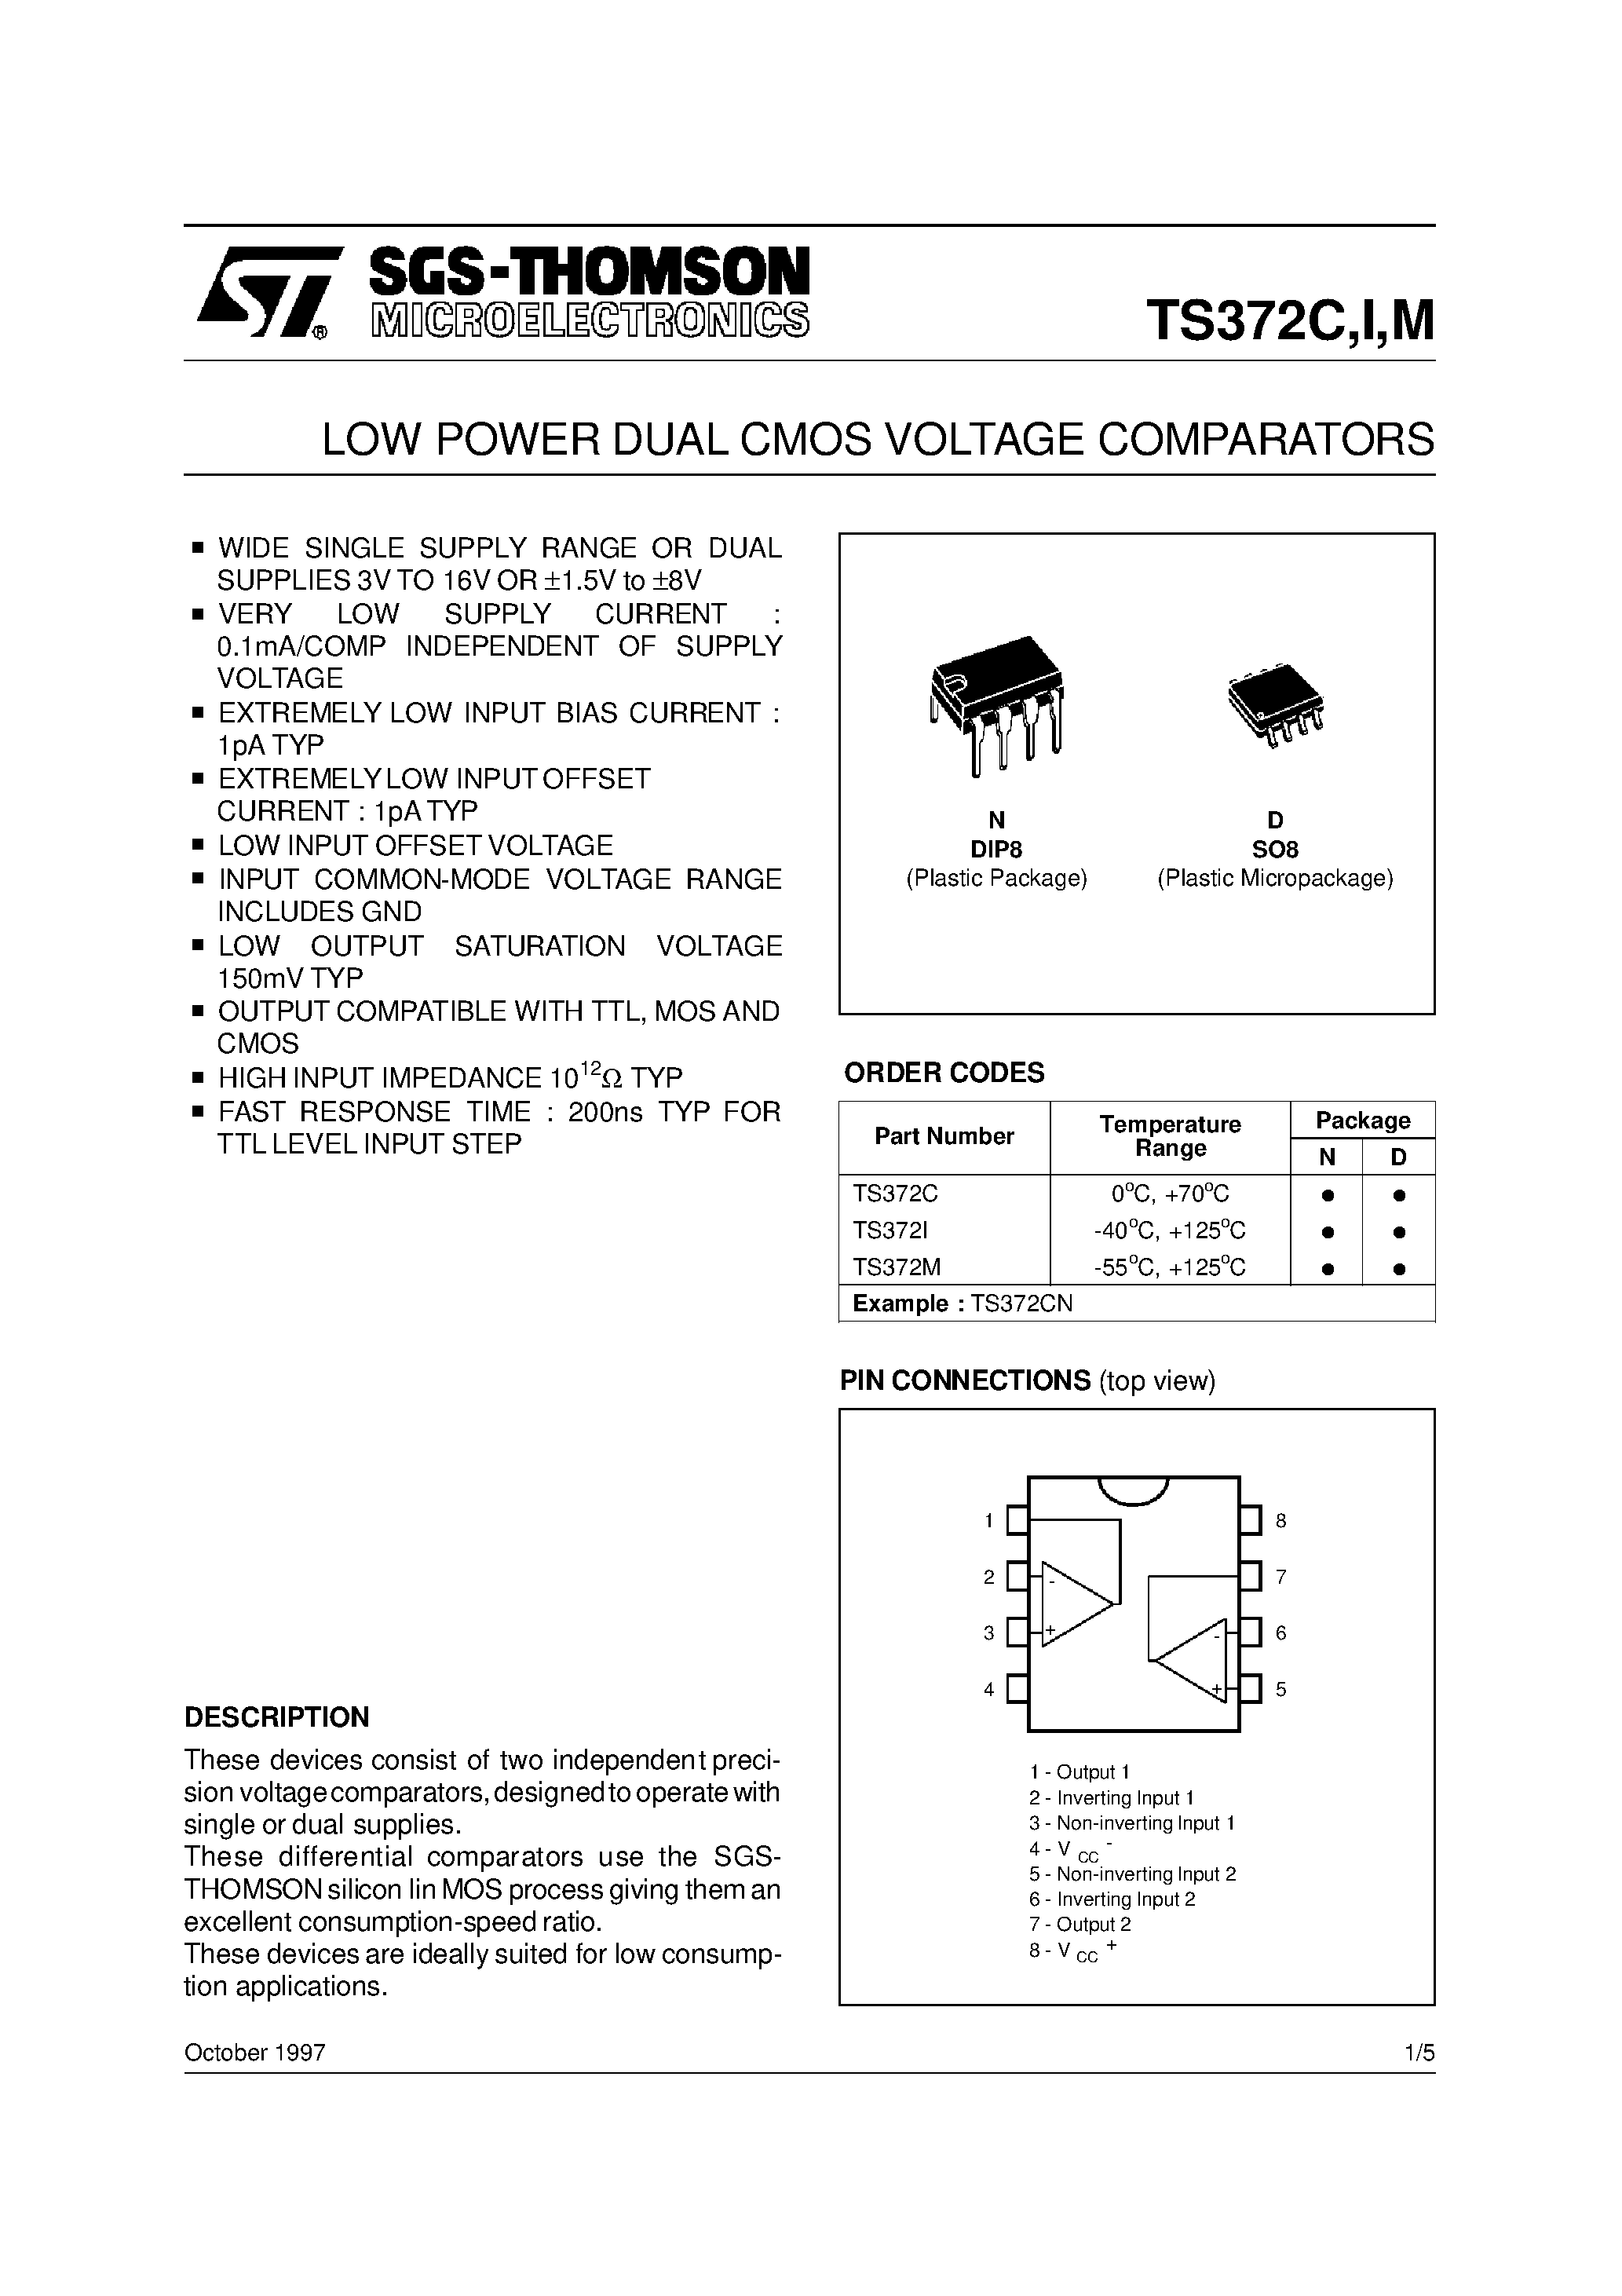 Datasheet TS372C - LOW POWER DUAL CMOS VOLTAGE COMPARATORS page 1